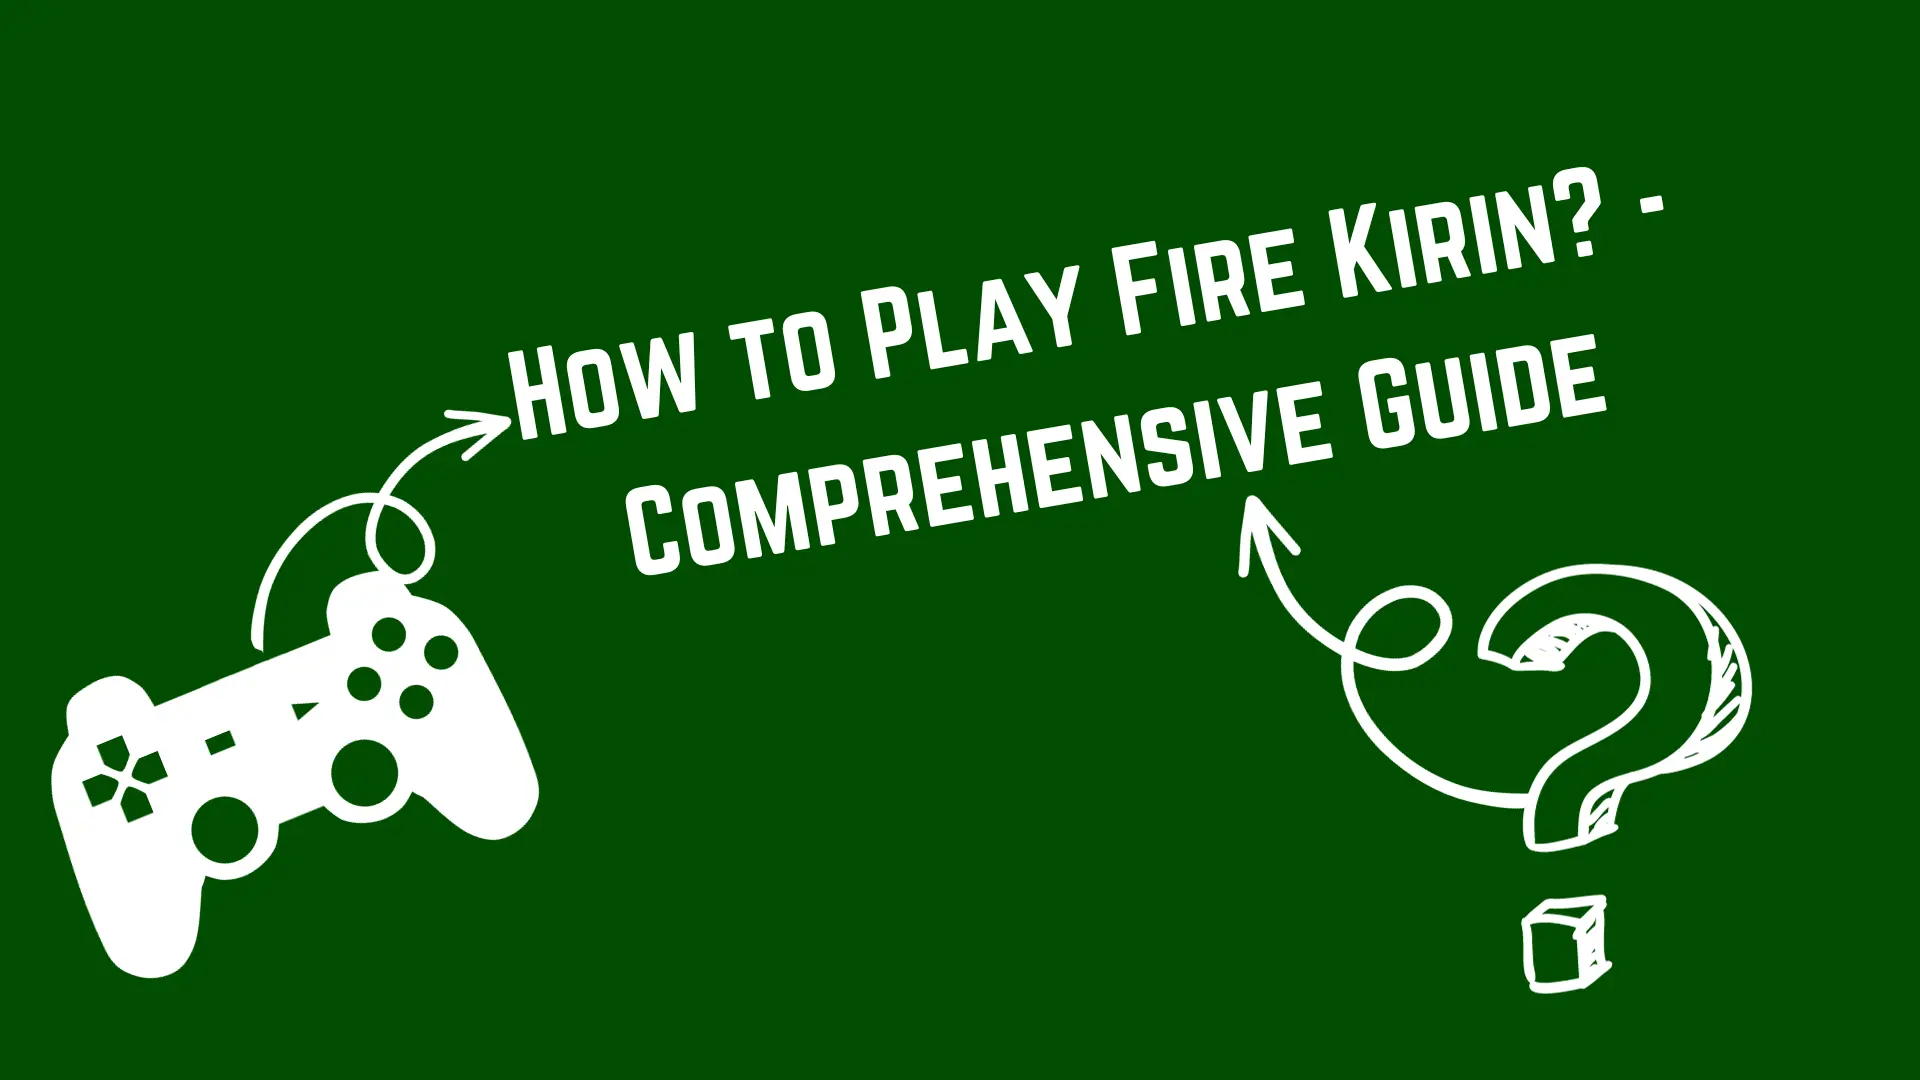 How to Play Fire Kirin